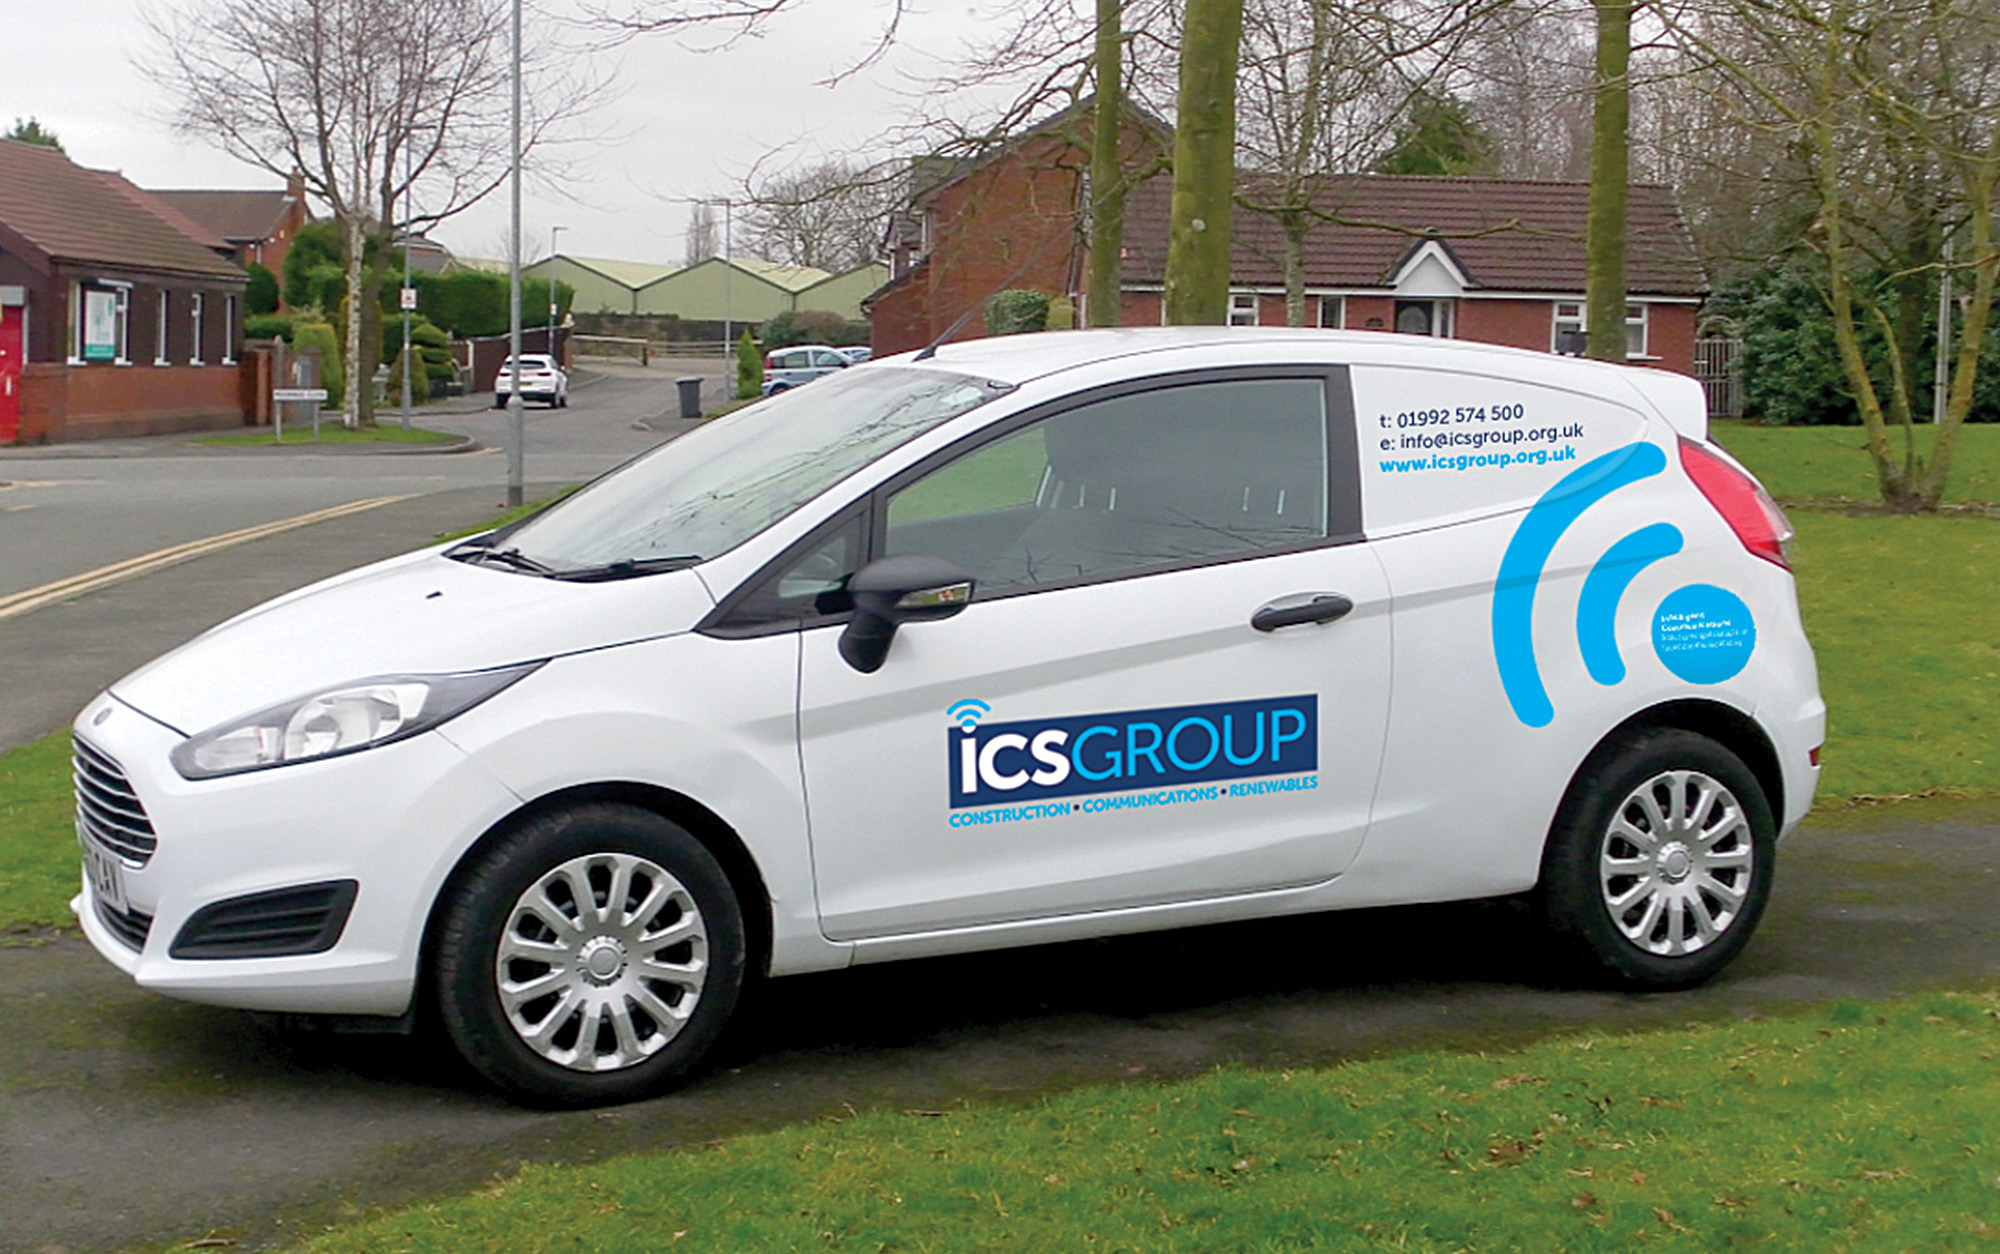 ICS Group vehicle livery